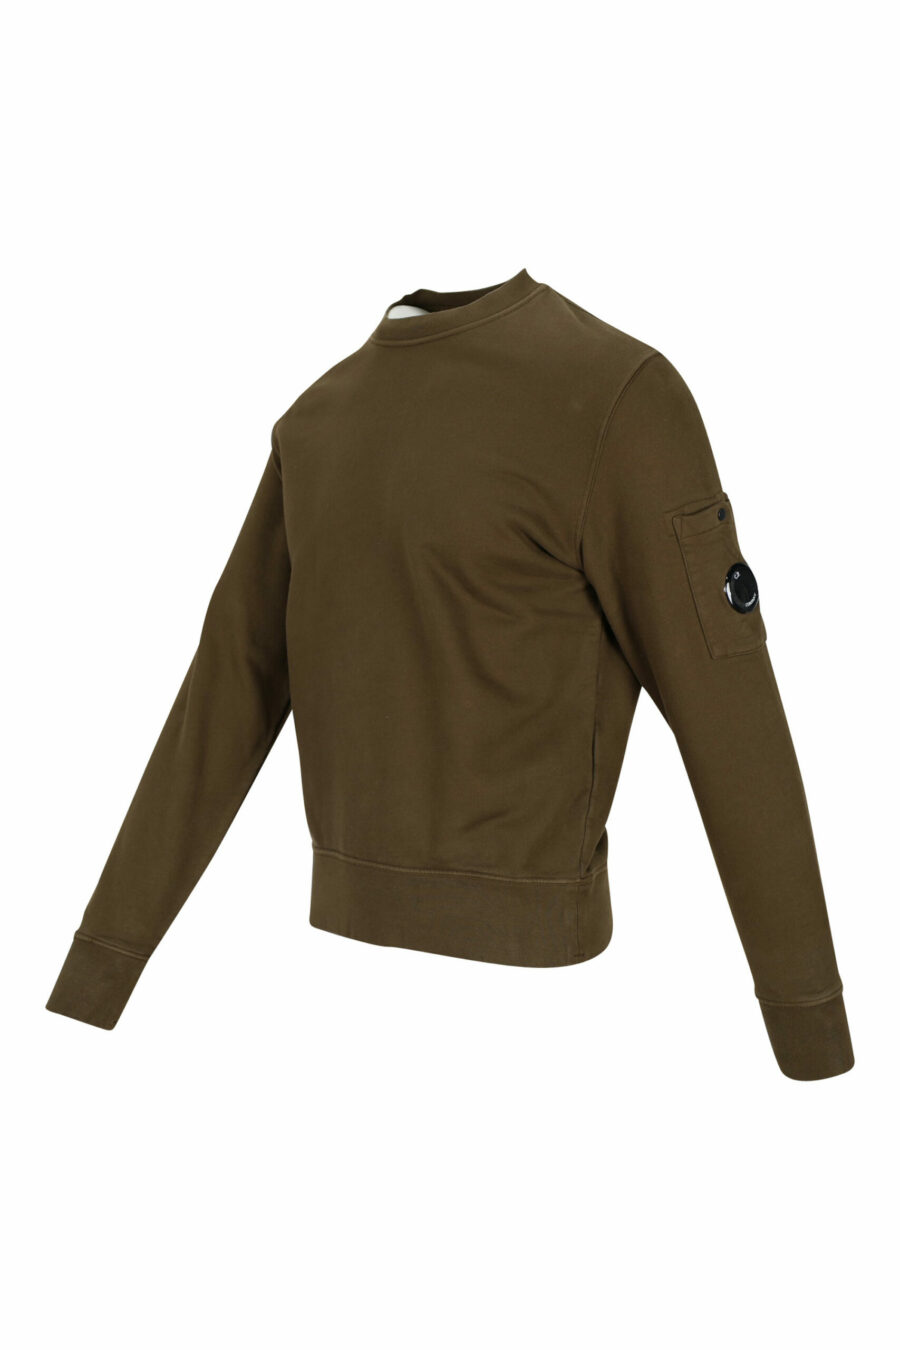 Sweat-shirt vert militaire avec logo latéral - 7620943598582 1 scaled